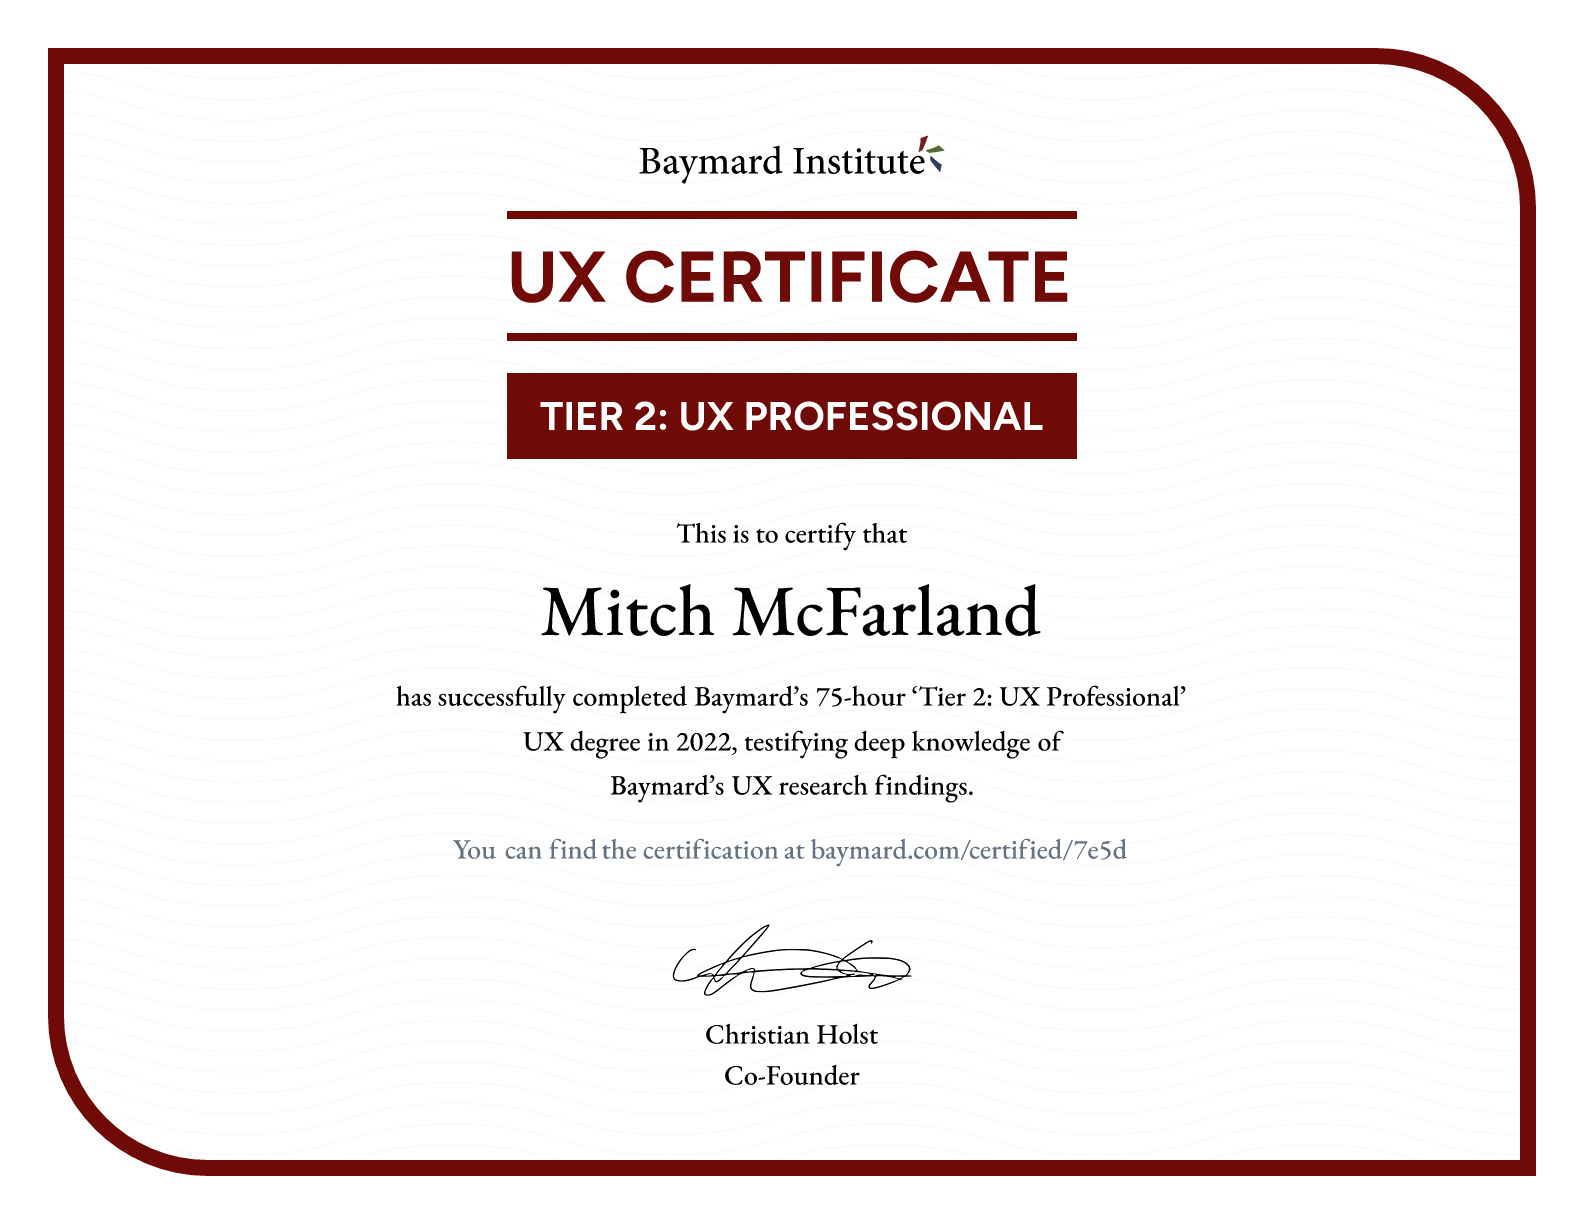 Mitch McFarland’s certificate